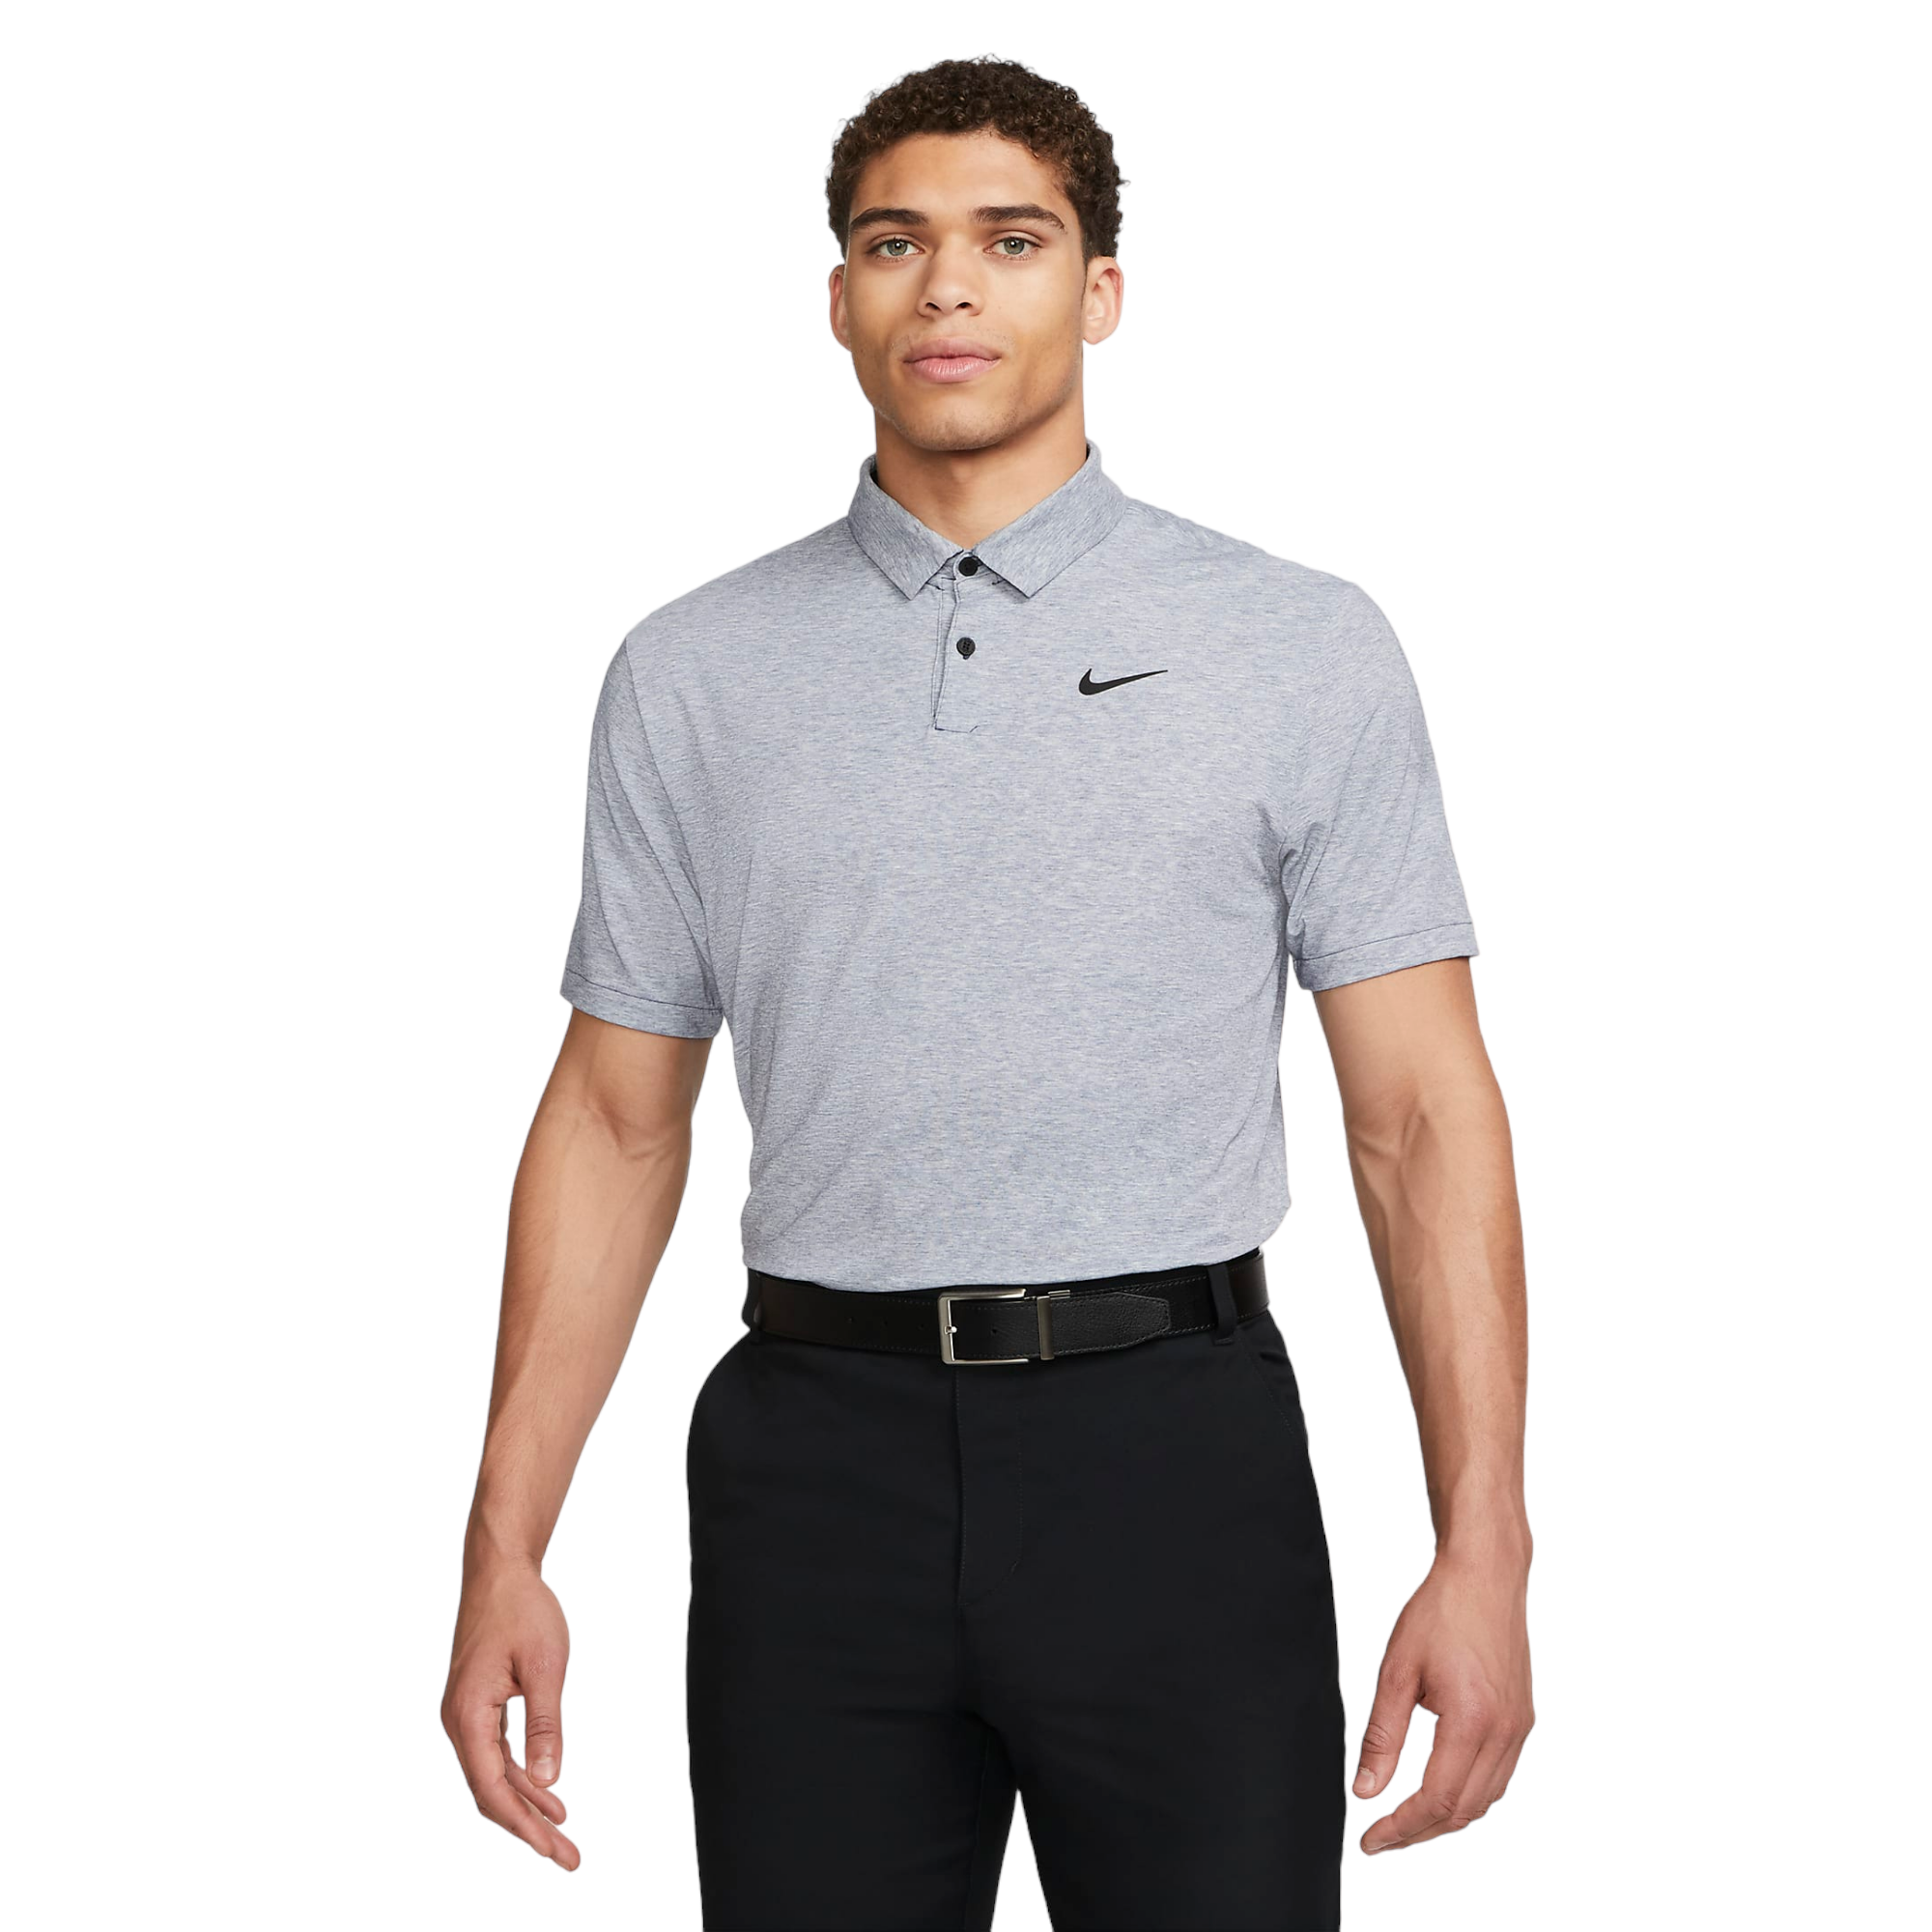 PLANET FITNESS Gym Staff Employee Shirt MEN'S XL Black Polo Golf Trainer  Mens